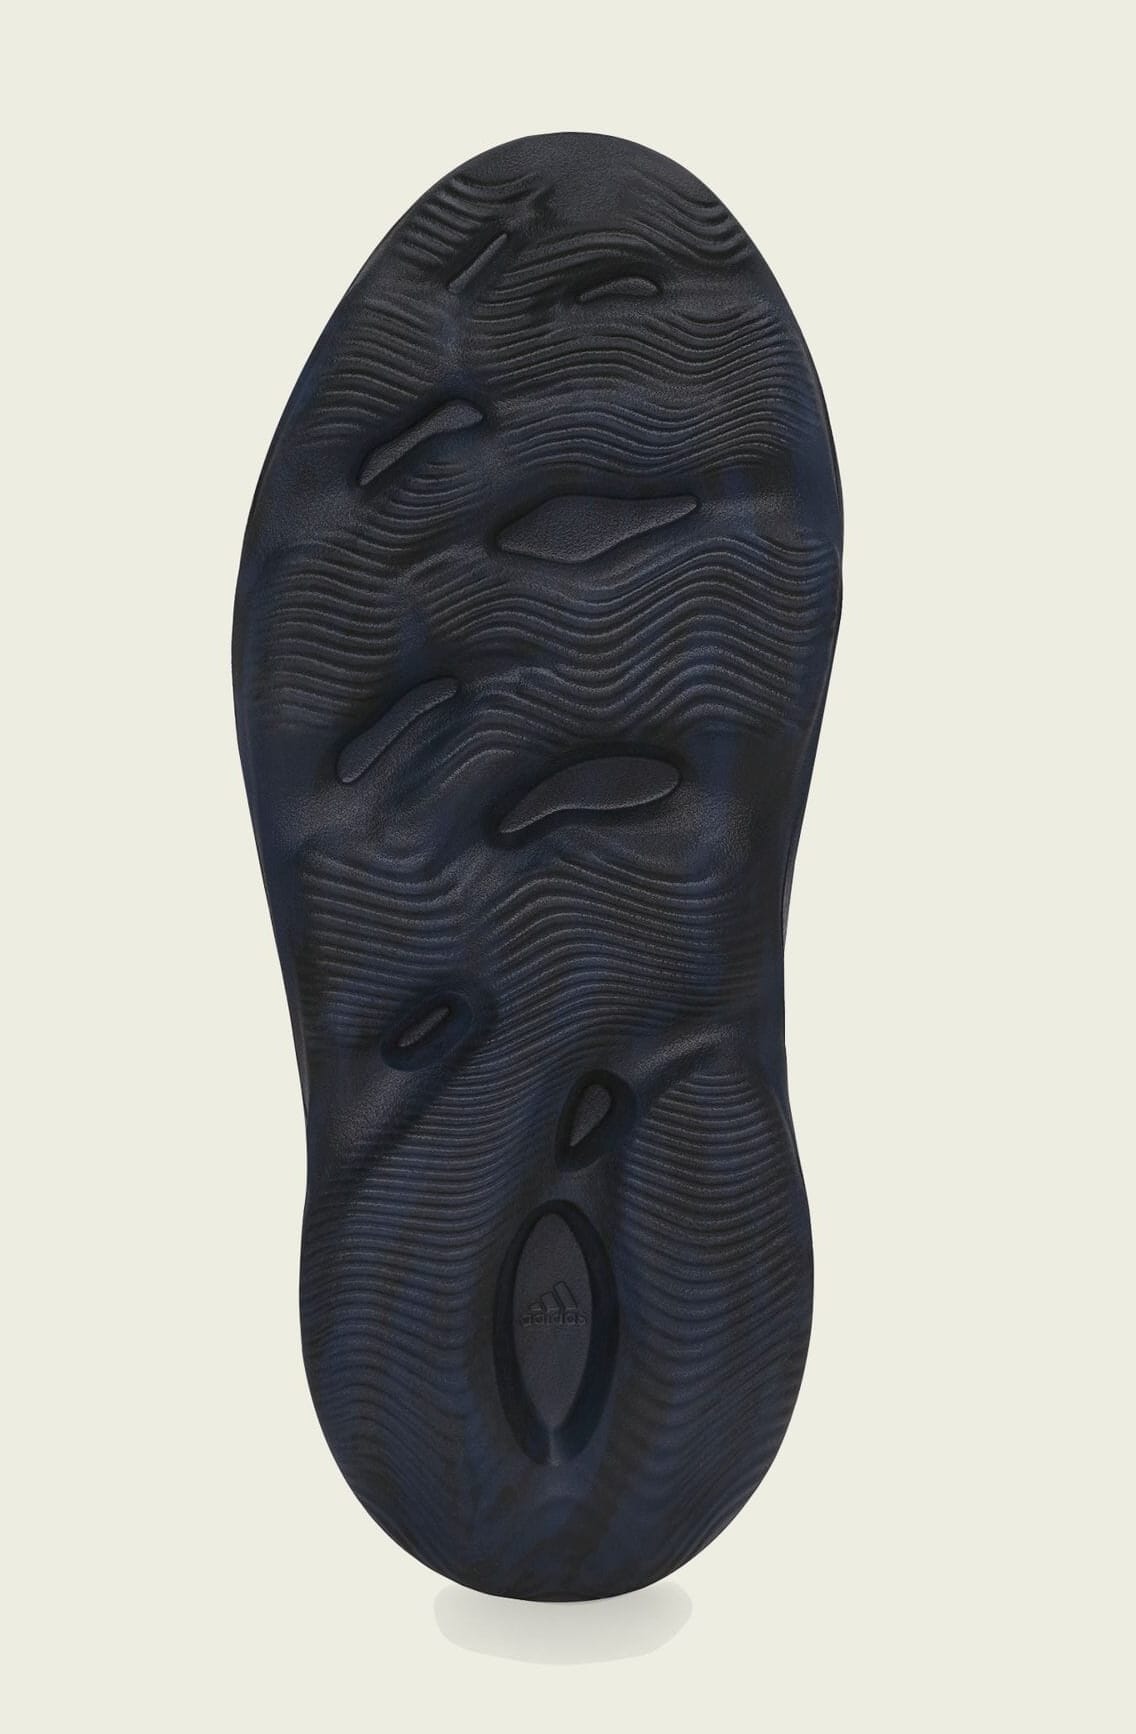 Adidas Yeezy Foam Runner &#x27;Mineral Blue&#x27; Outsole